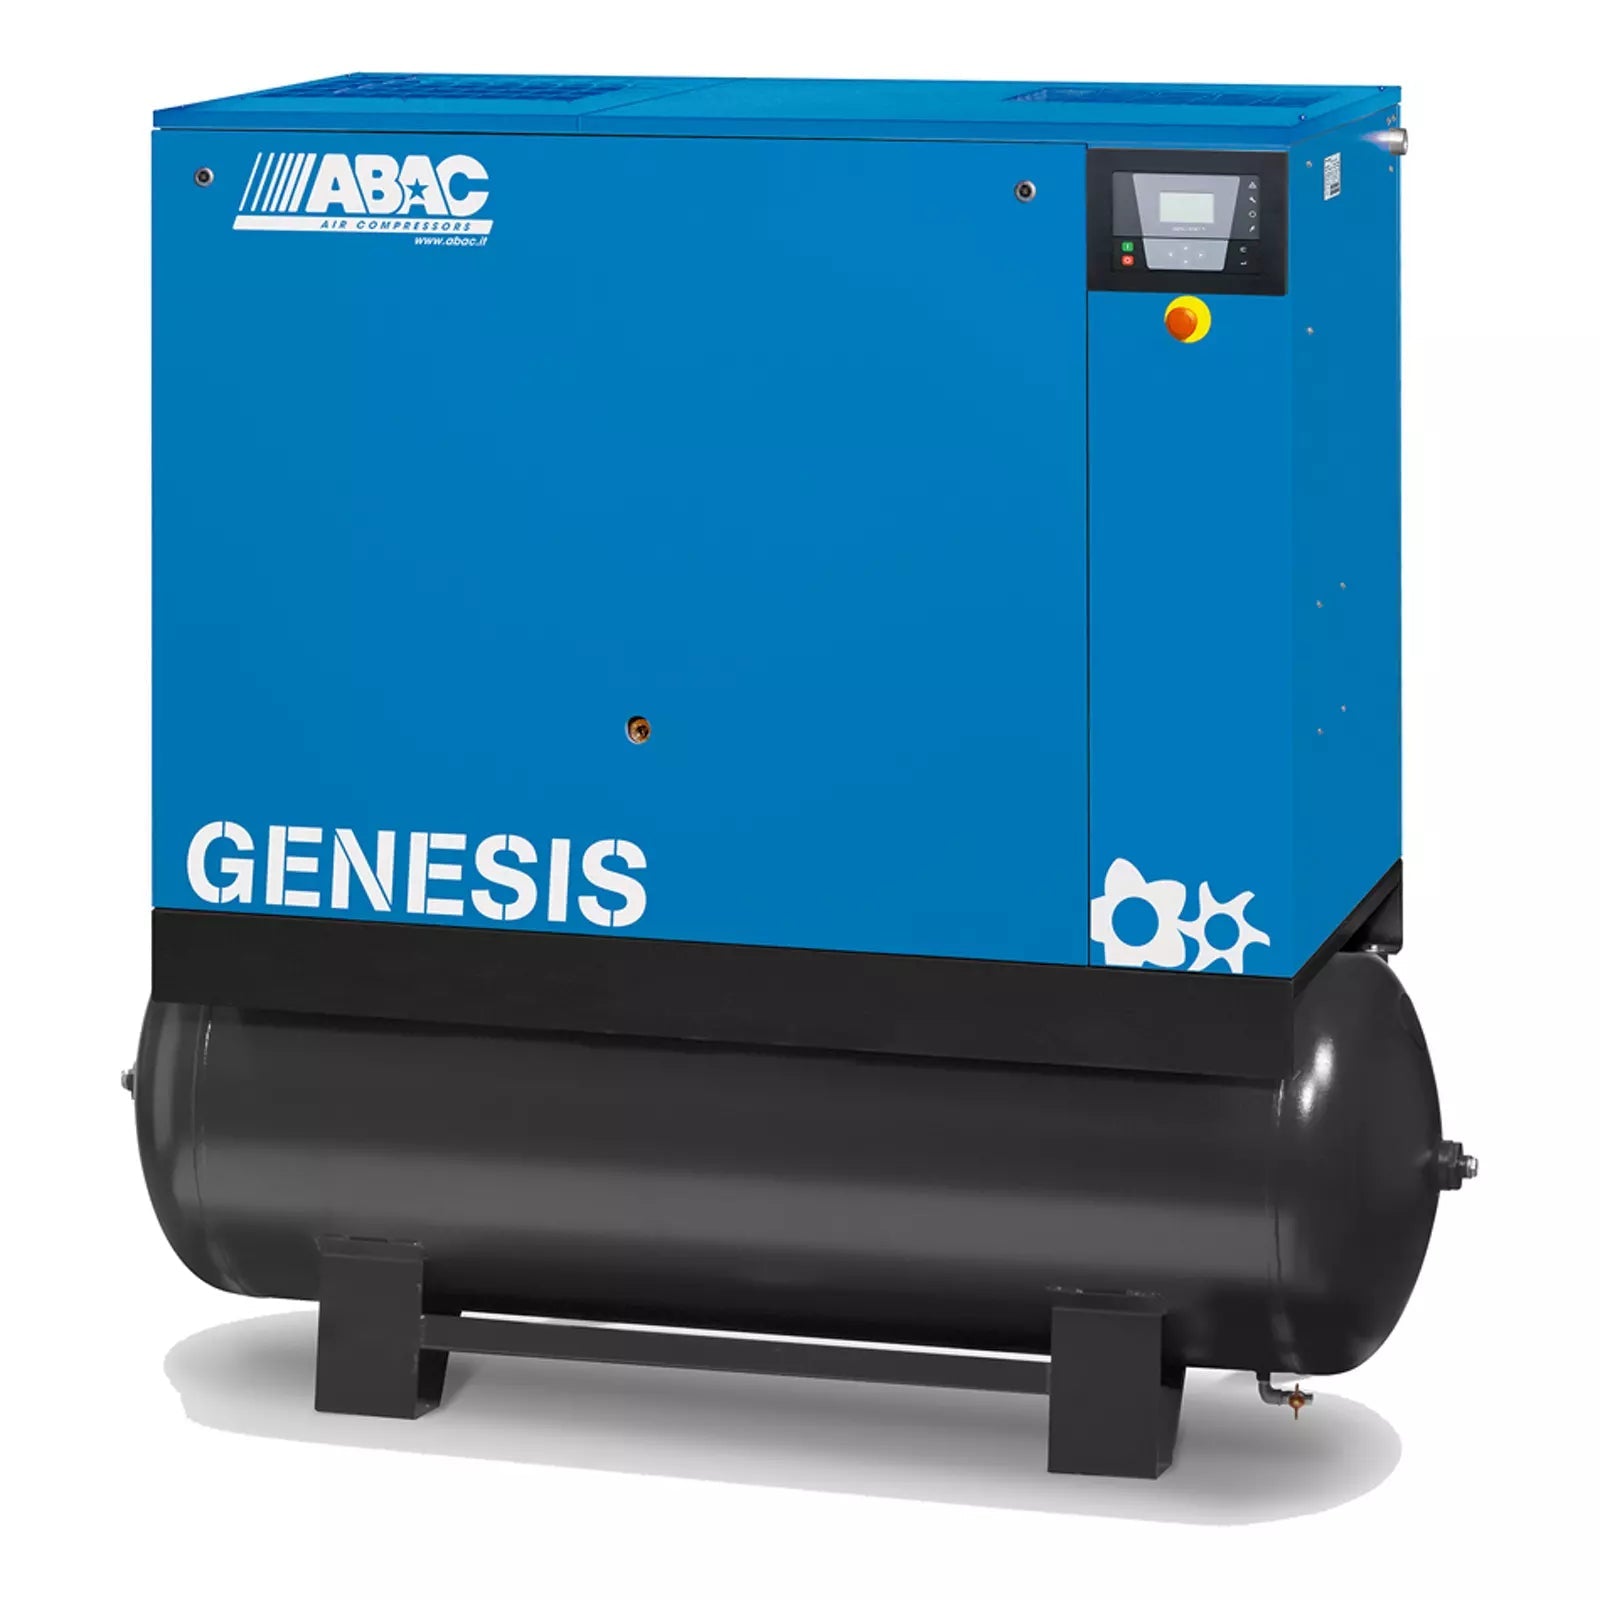 Compressori Genesis - da 7,5 a 22 kW Abac a vite velocita' variabile